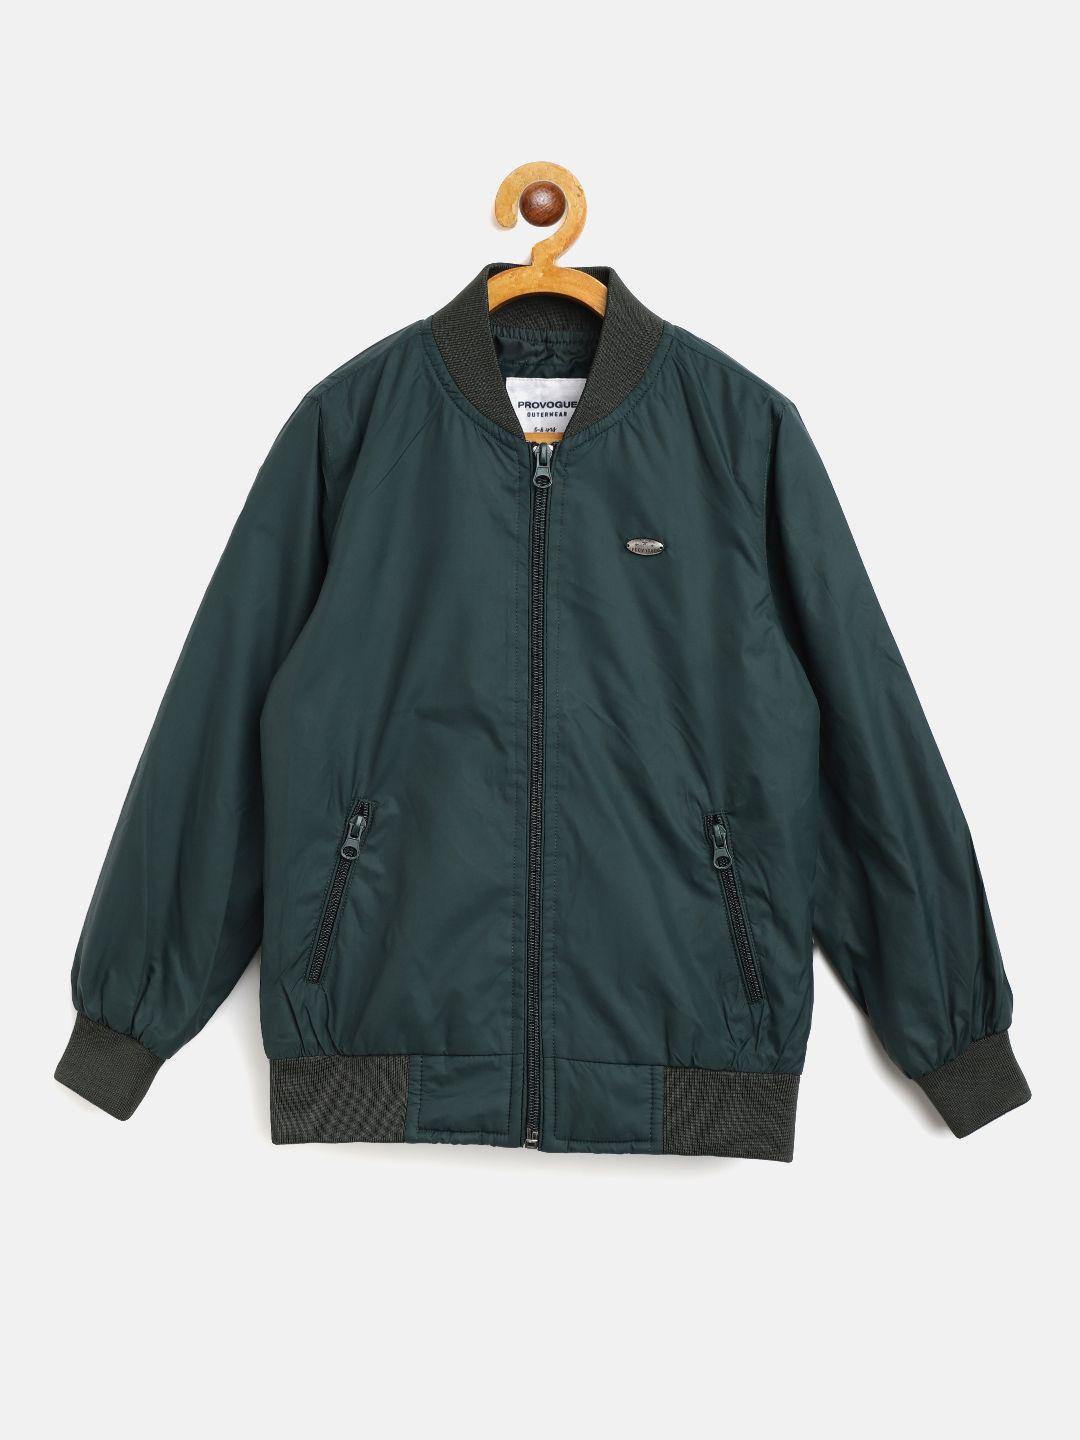 provogue-boys-green-solid-bomber-jacket